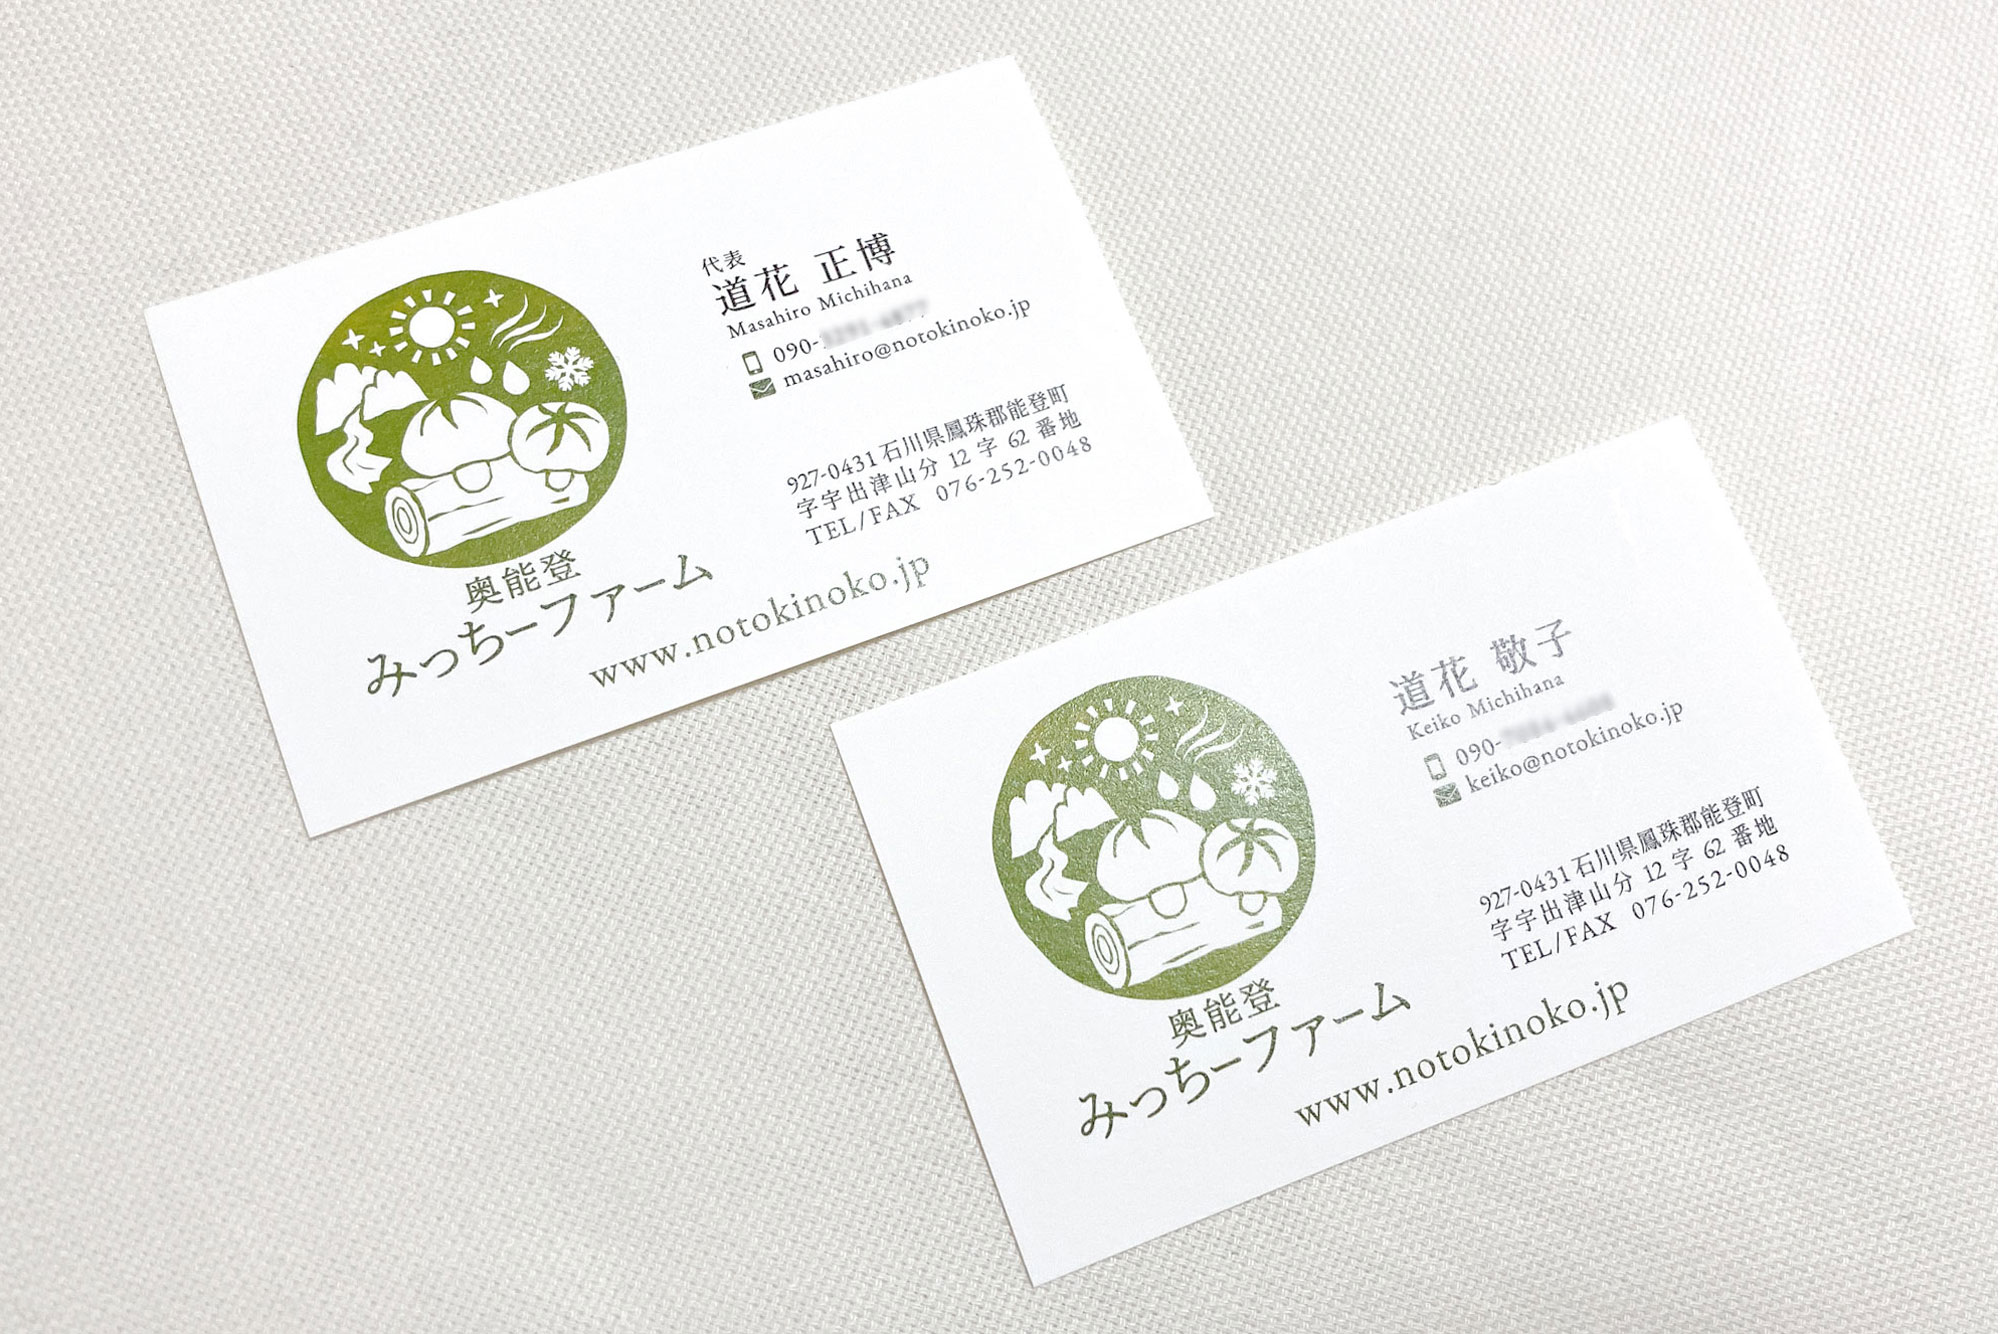 notokinoko_namecard